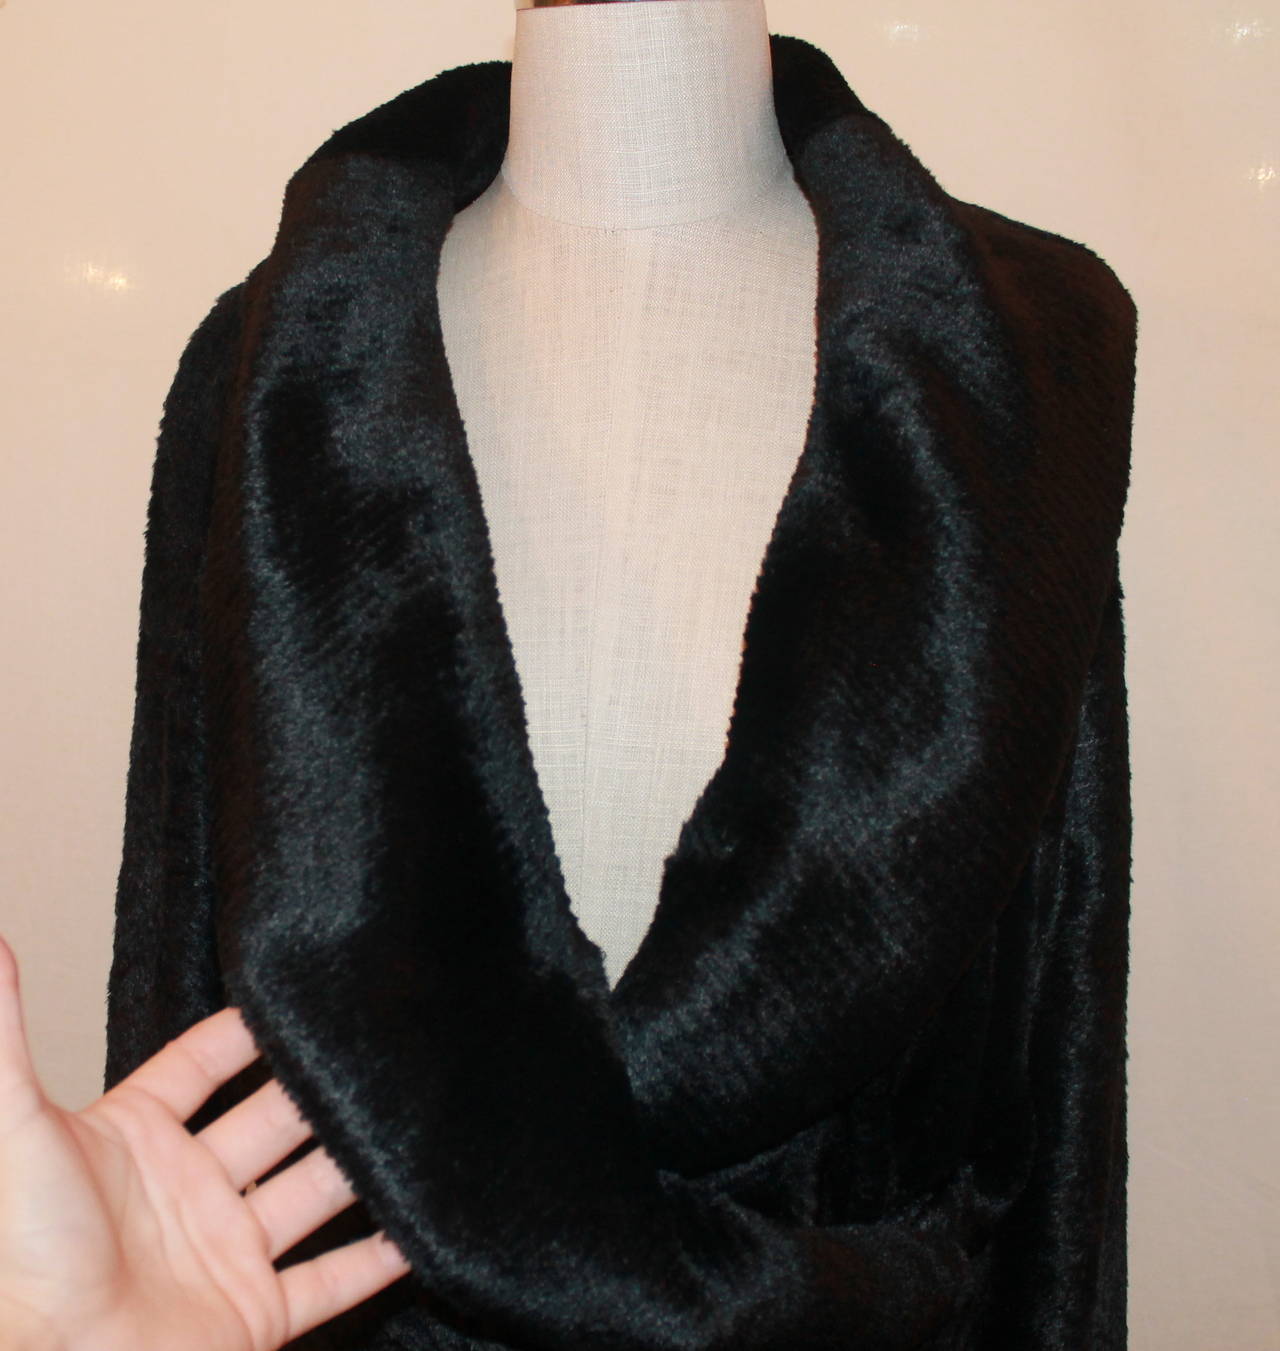 Alaia Black Viscose Blend Wrap Dress/Coat - M. This piece is in impeccable condition.

Measurements:
Bust- 34